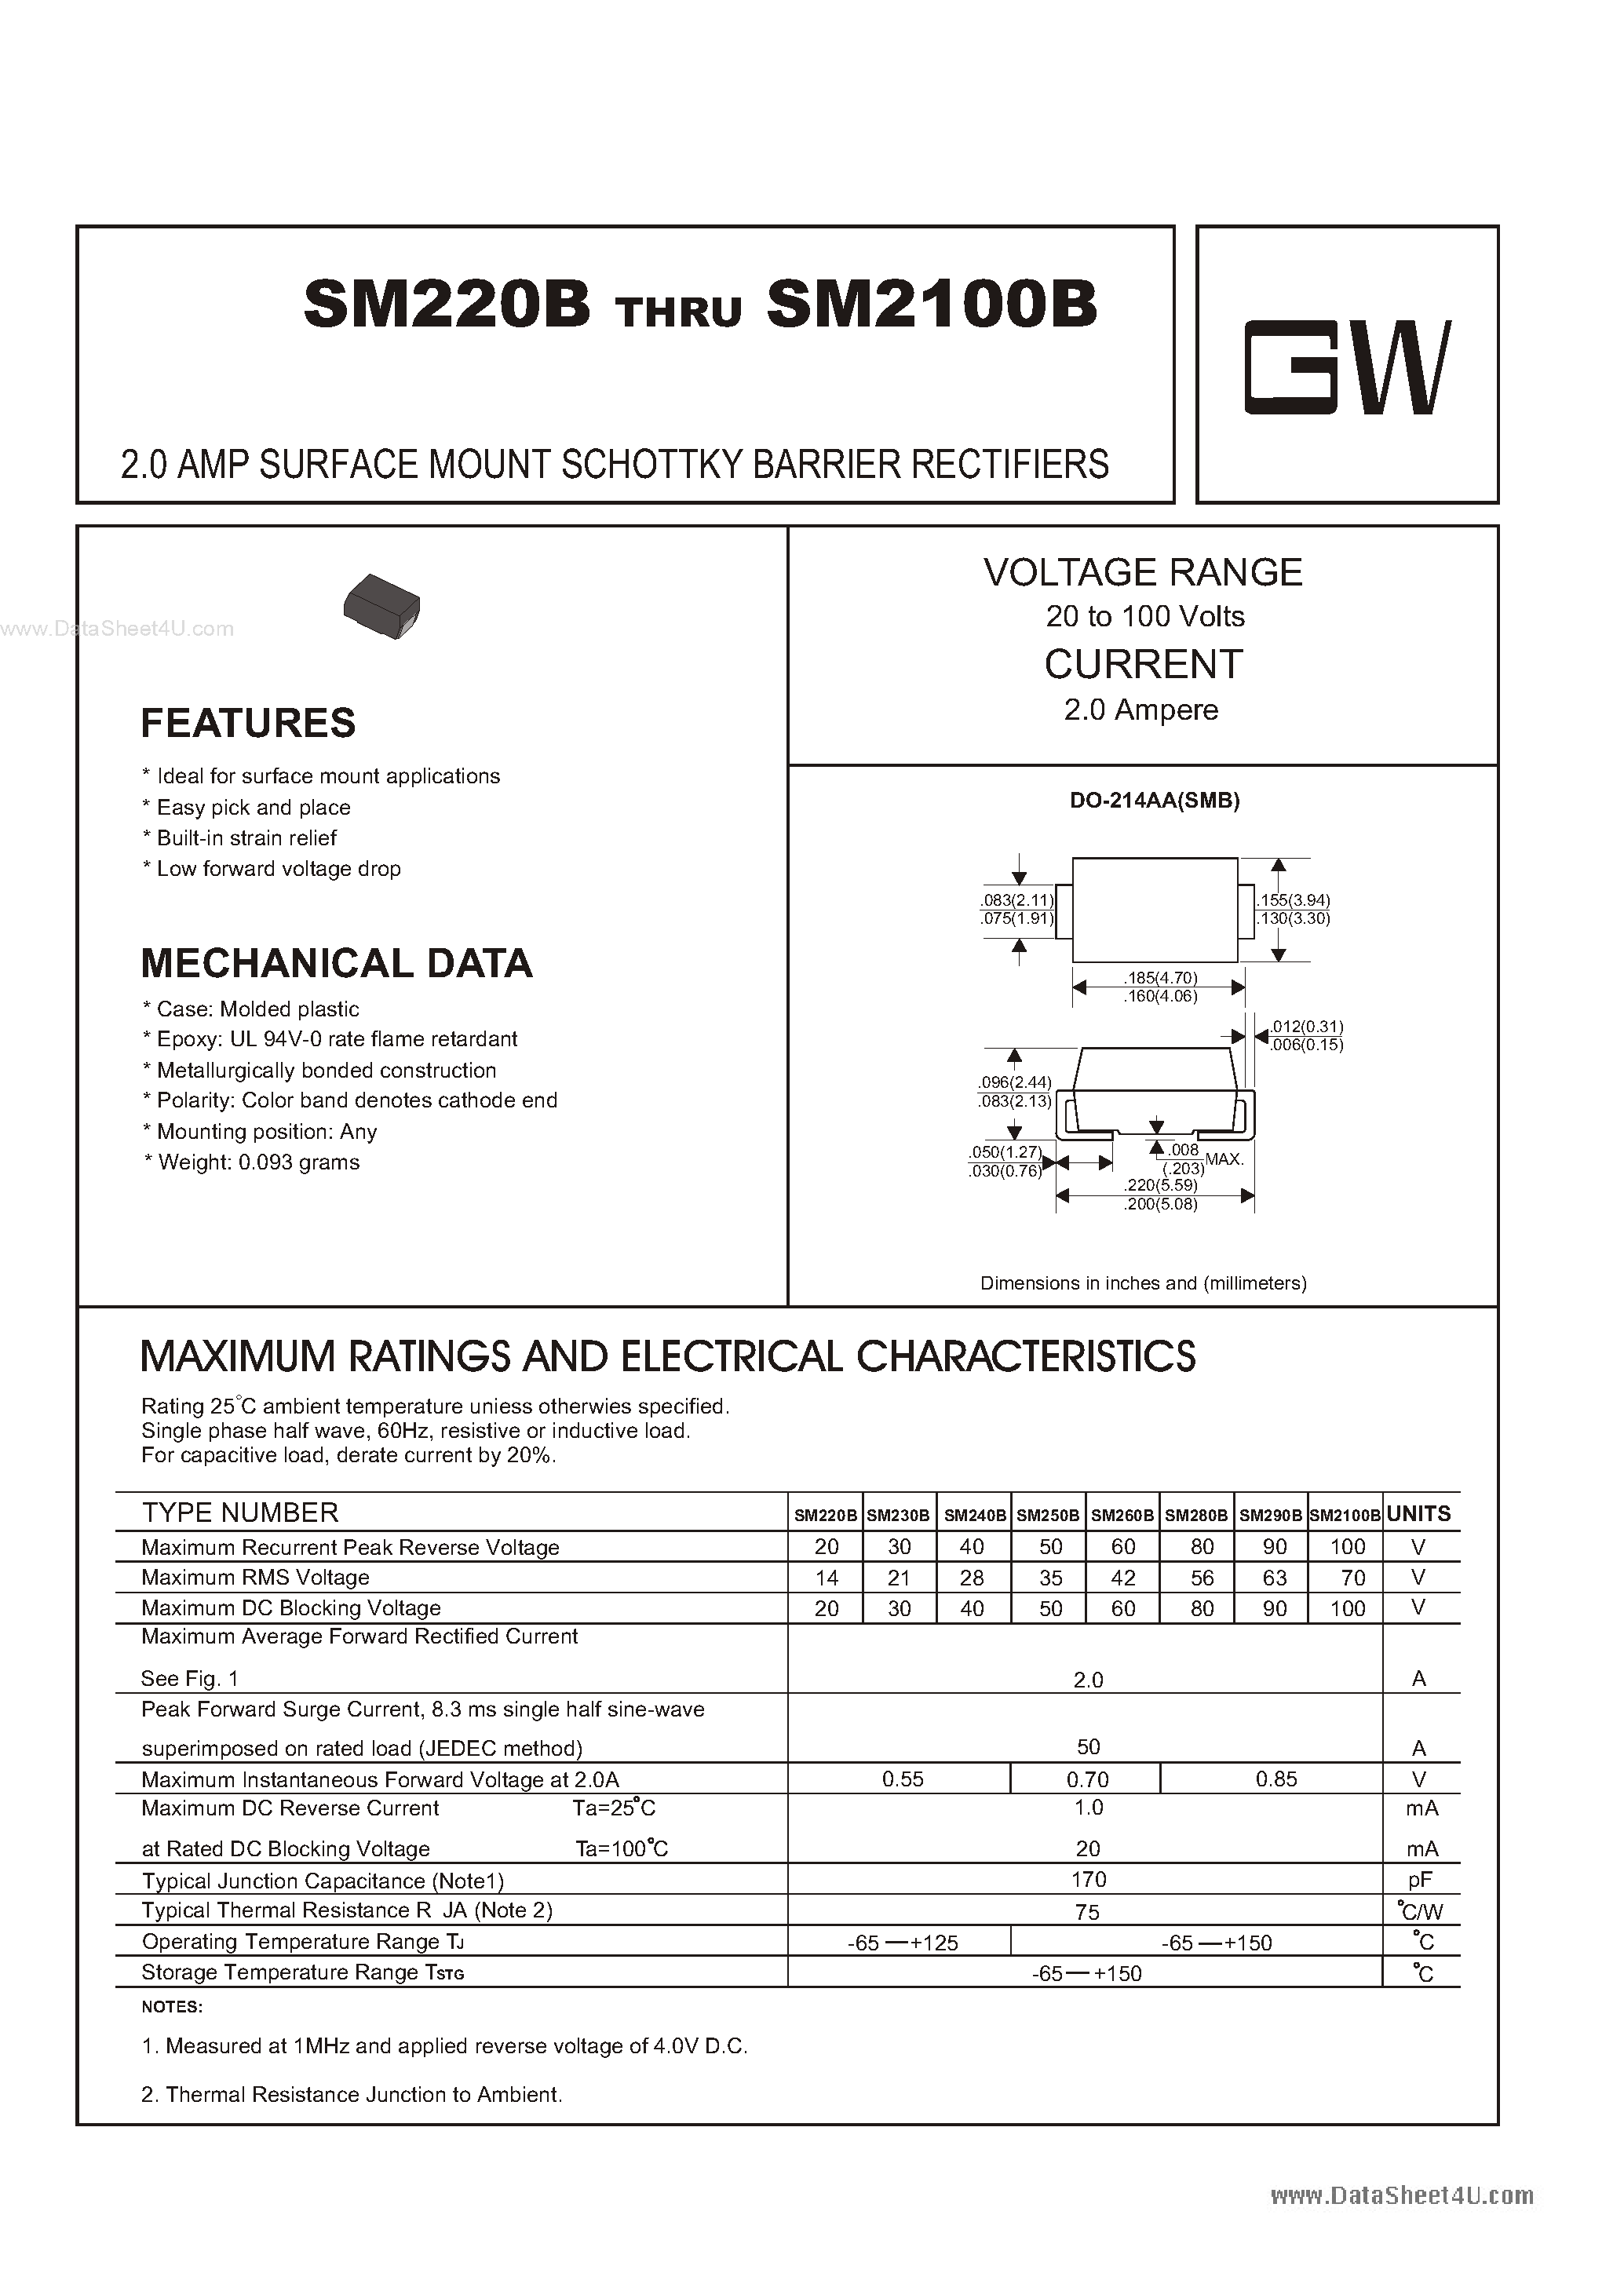 Datasheet SM2100B - (SM220B - SM2100B) 2.0 AMP SURFACE MOUNT SCHOTTKY BARRIER RECTIFIERS page 1